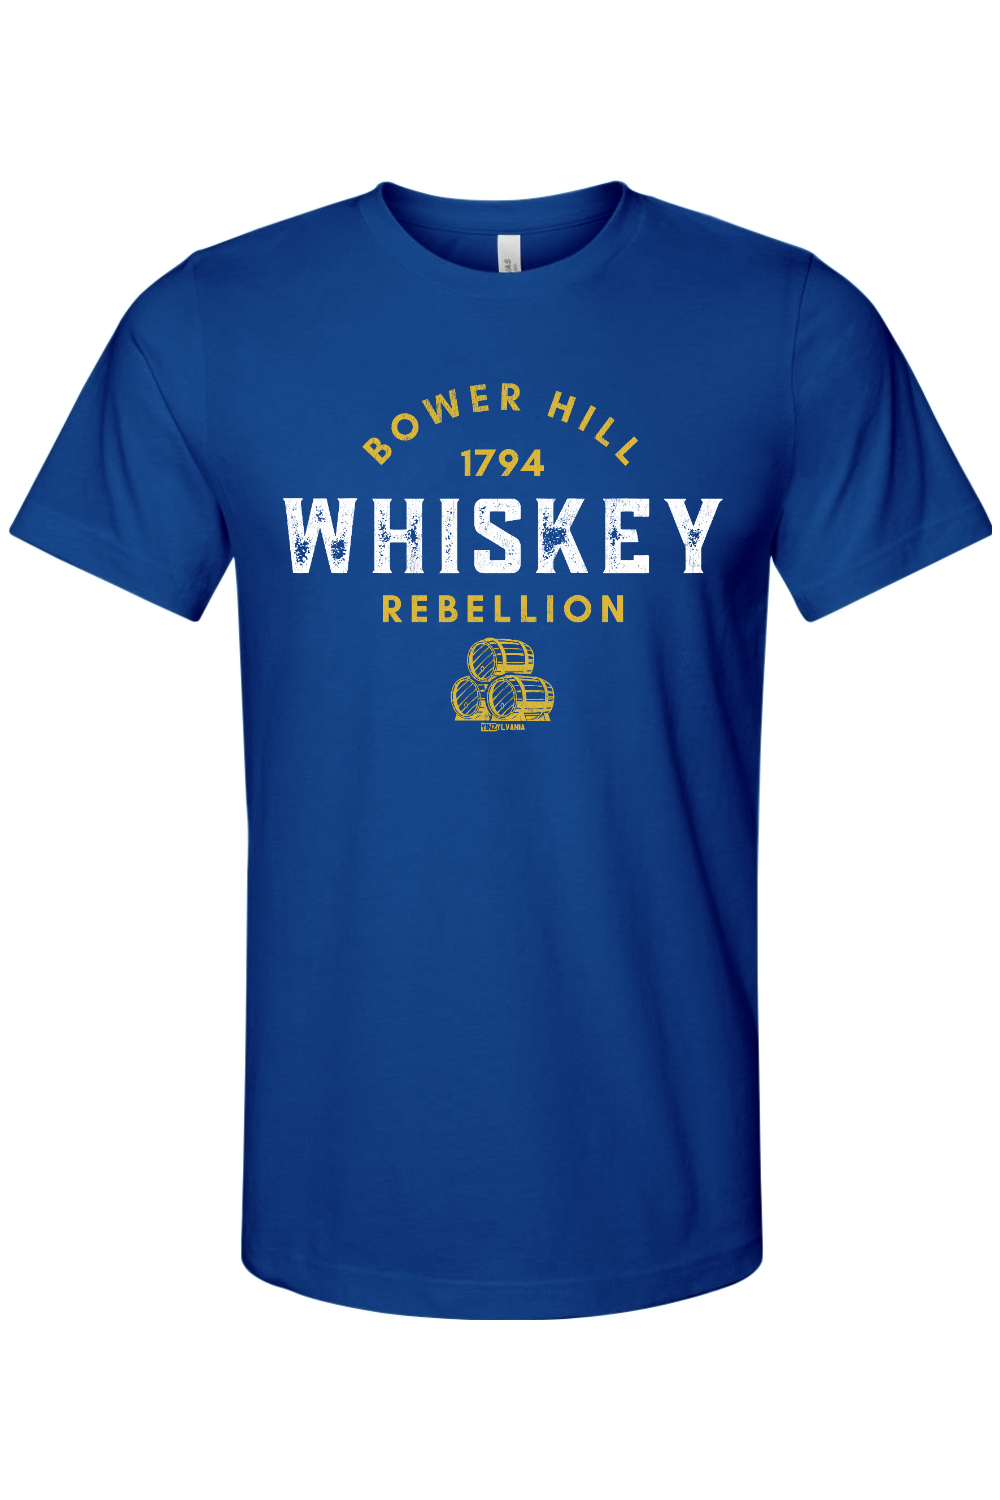 Whiskey Rebellion - Bella + Canvas Jersey Tee - Yinzylvania